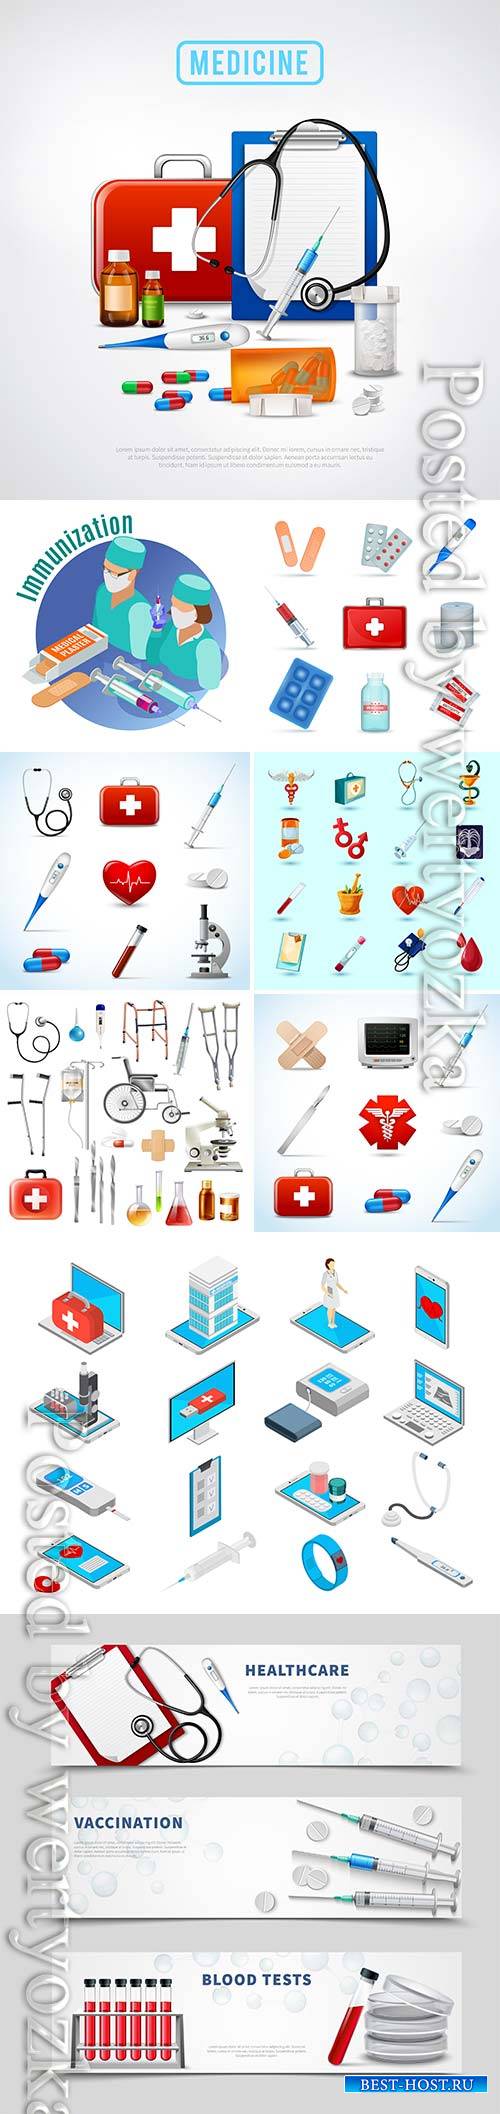 Medicine isometric concept with medical equipment symbols vector illustration